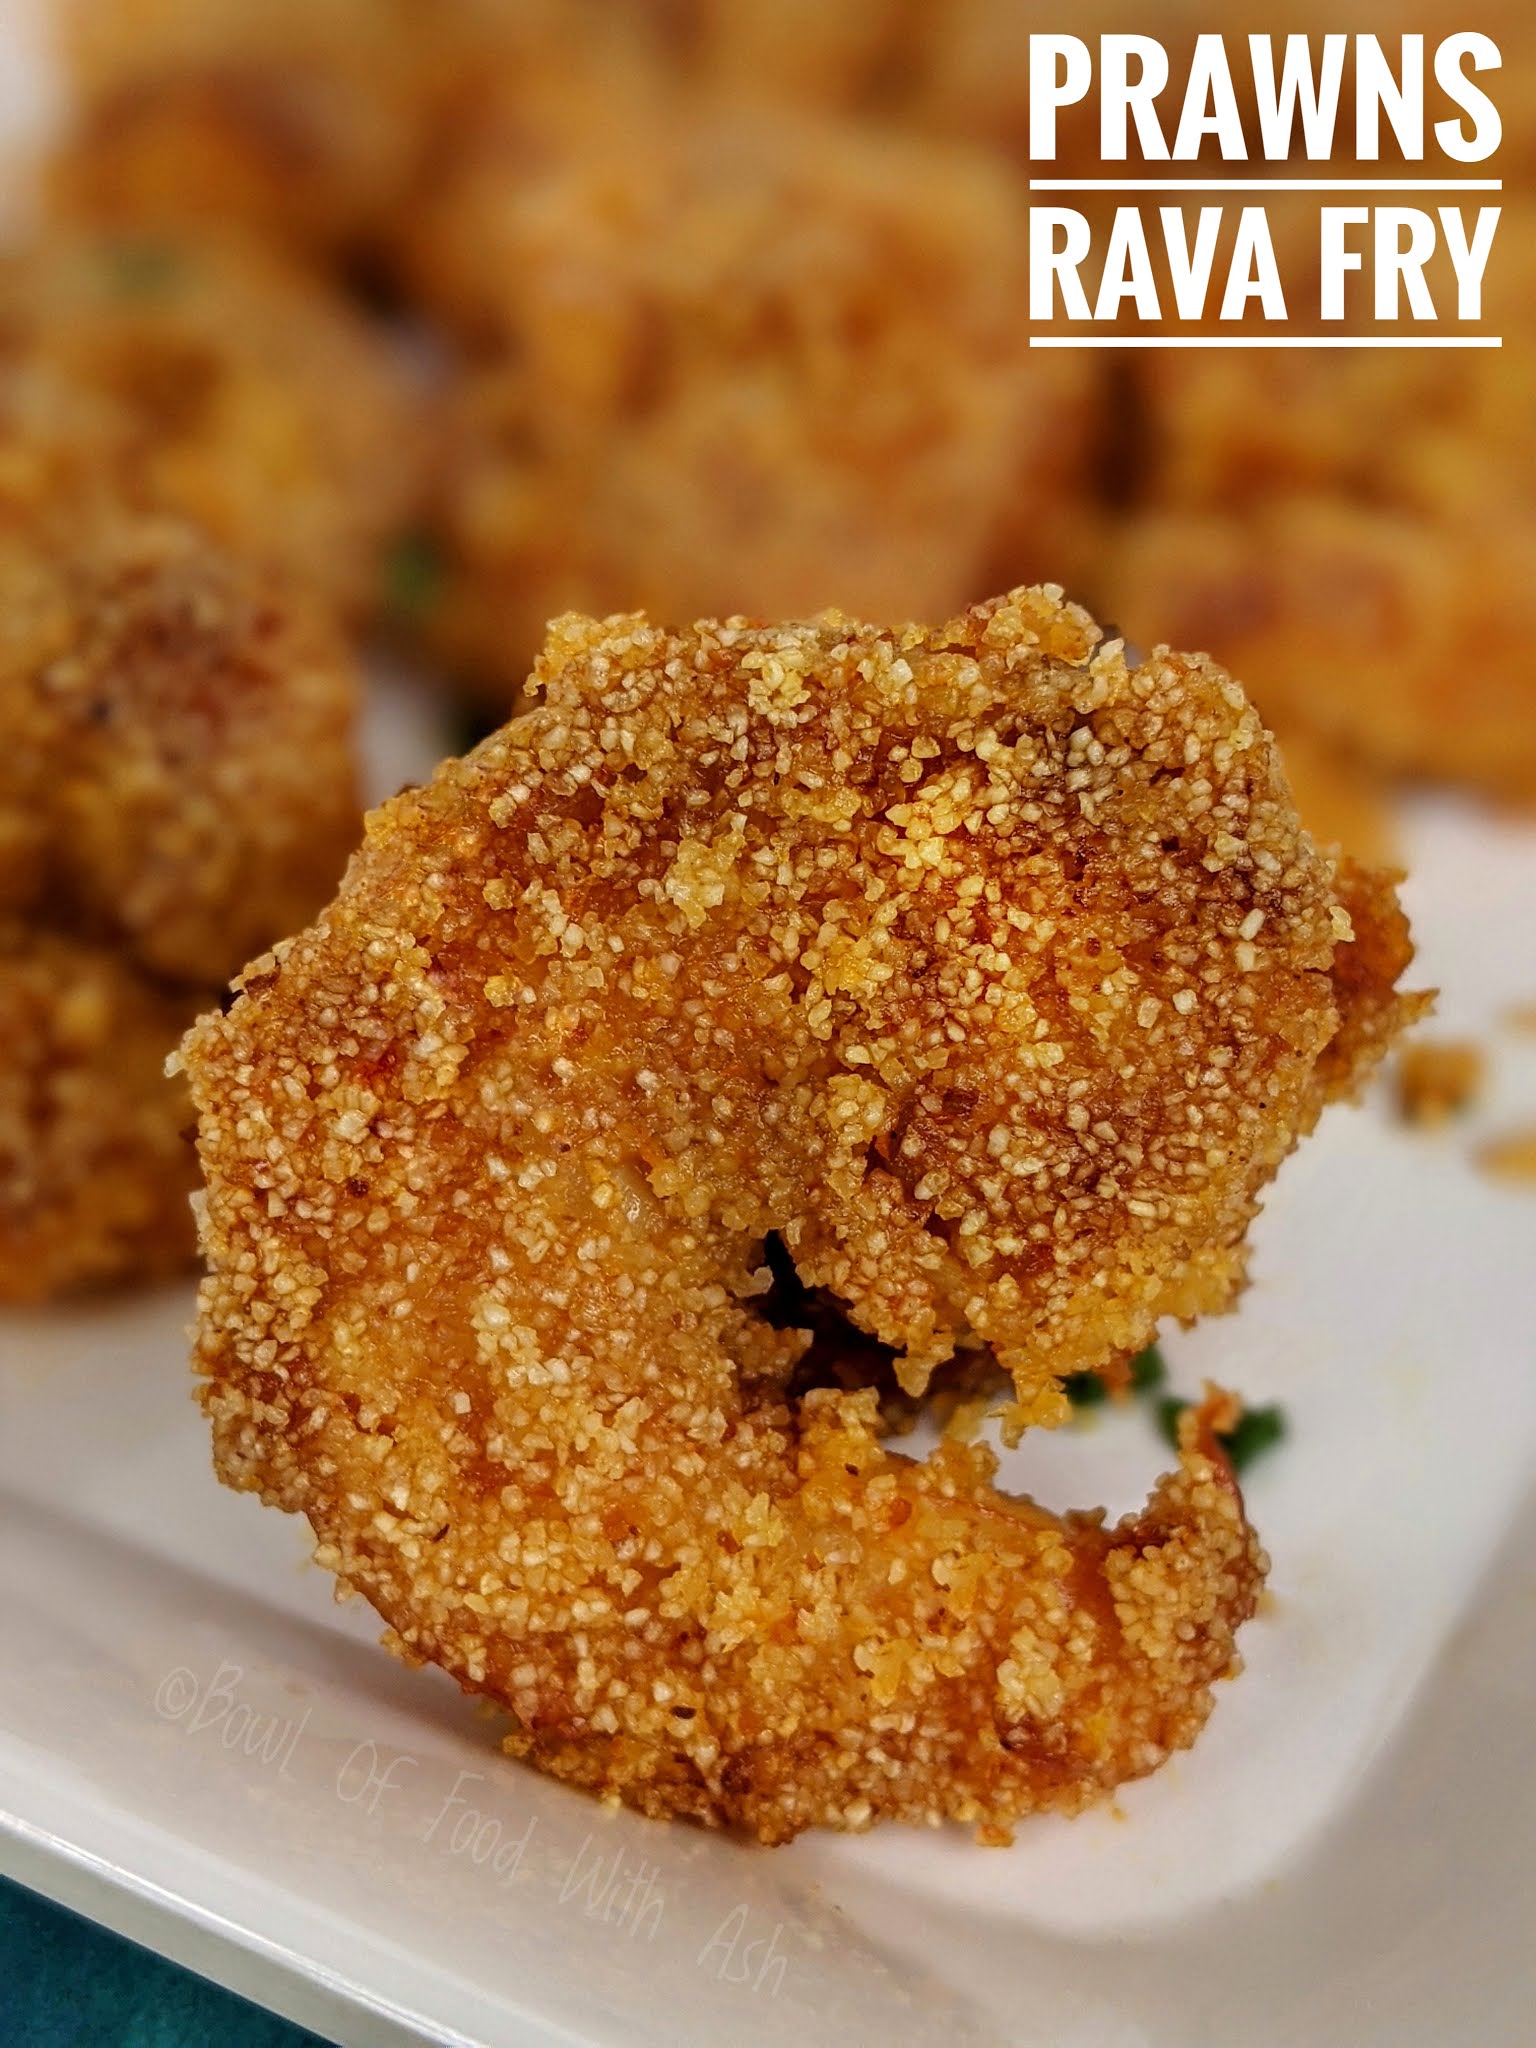 Prawns Rava Fry Recipe | How To Make Rava Fried Prawns